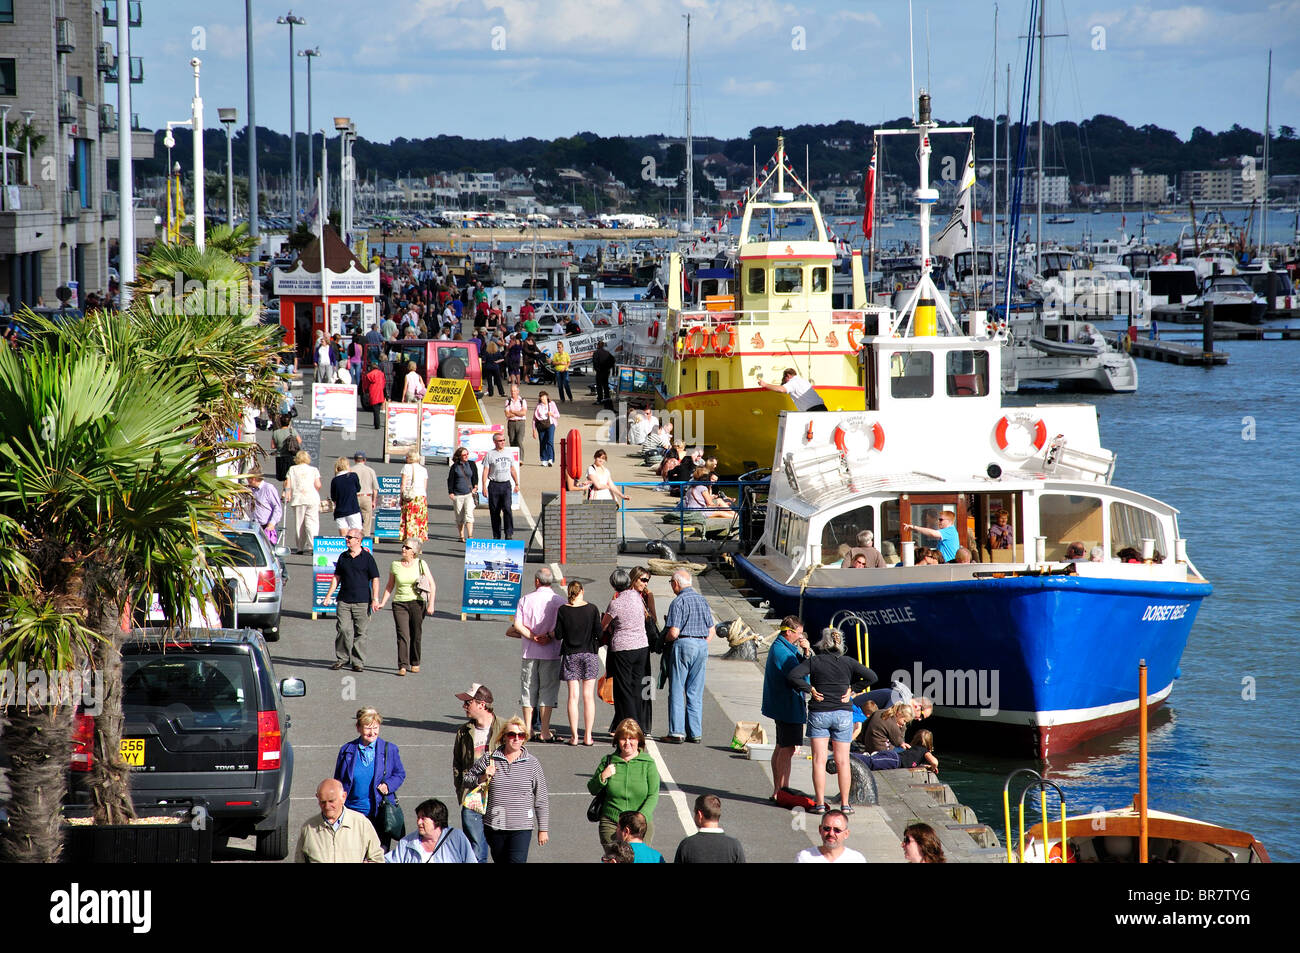 Promenade view, The Quay, Poole, Dorset, England, United Kingdom Stock Photo